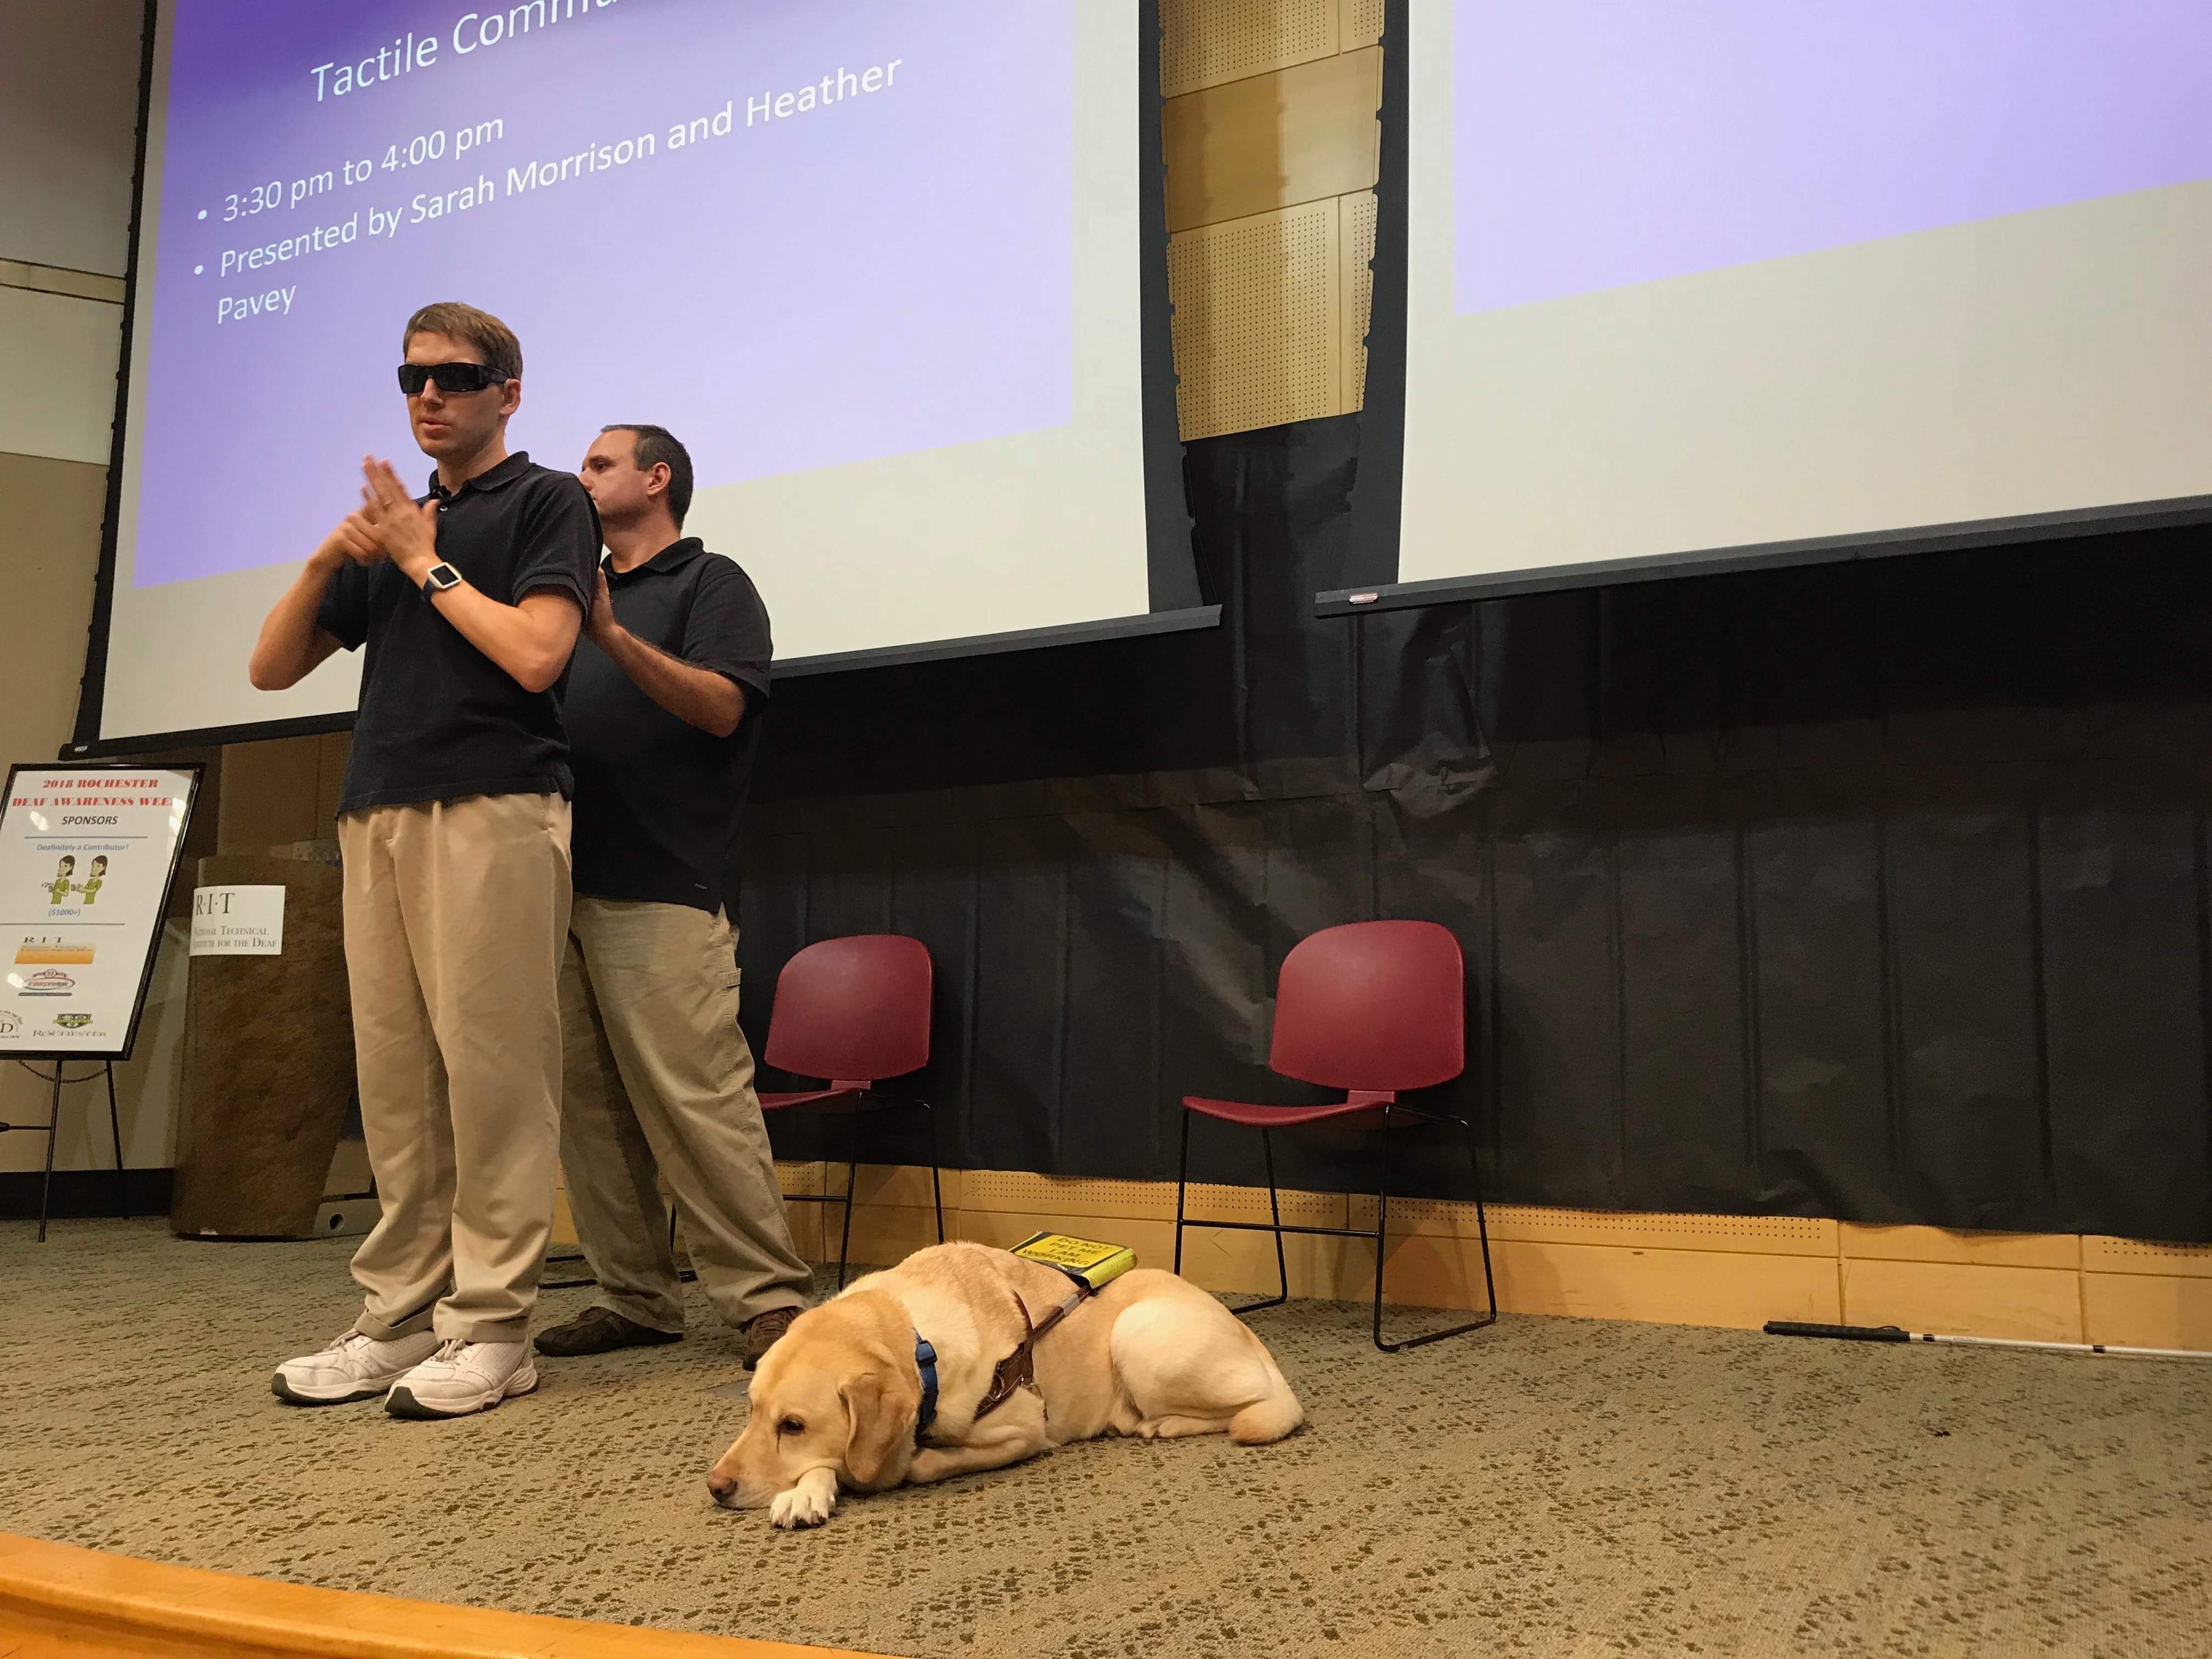 Jason presenting with a interpreting providing environmental information a guide dog next to Jason.